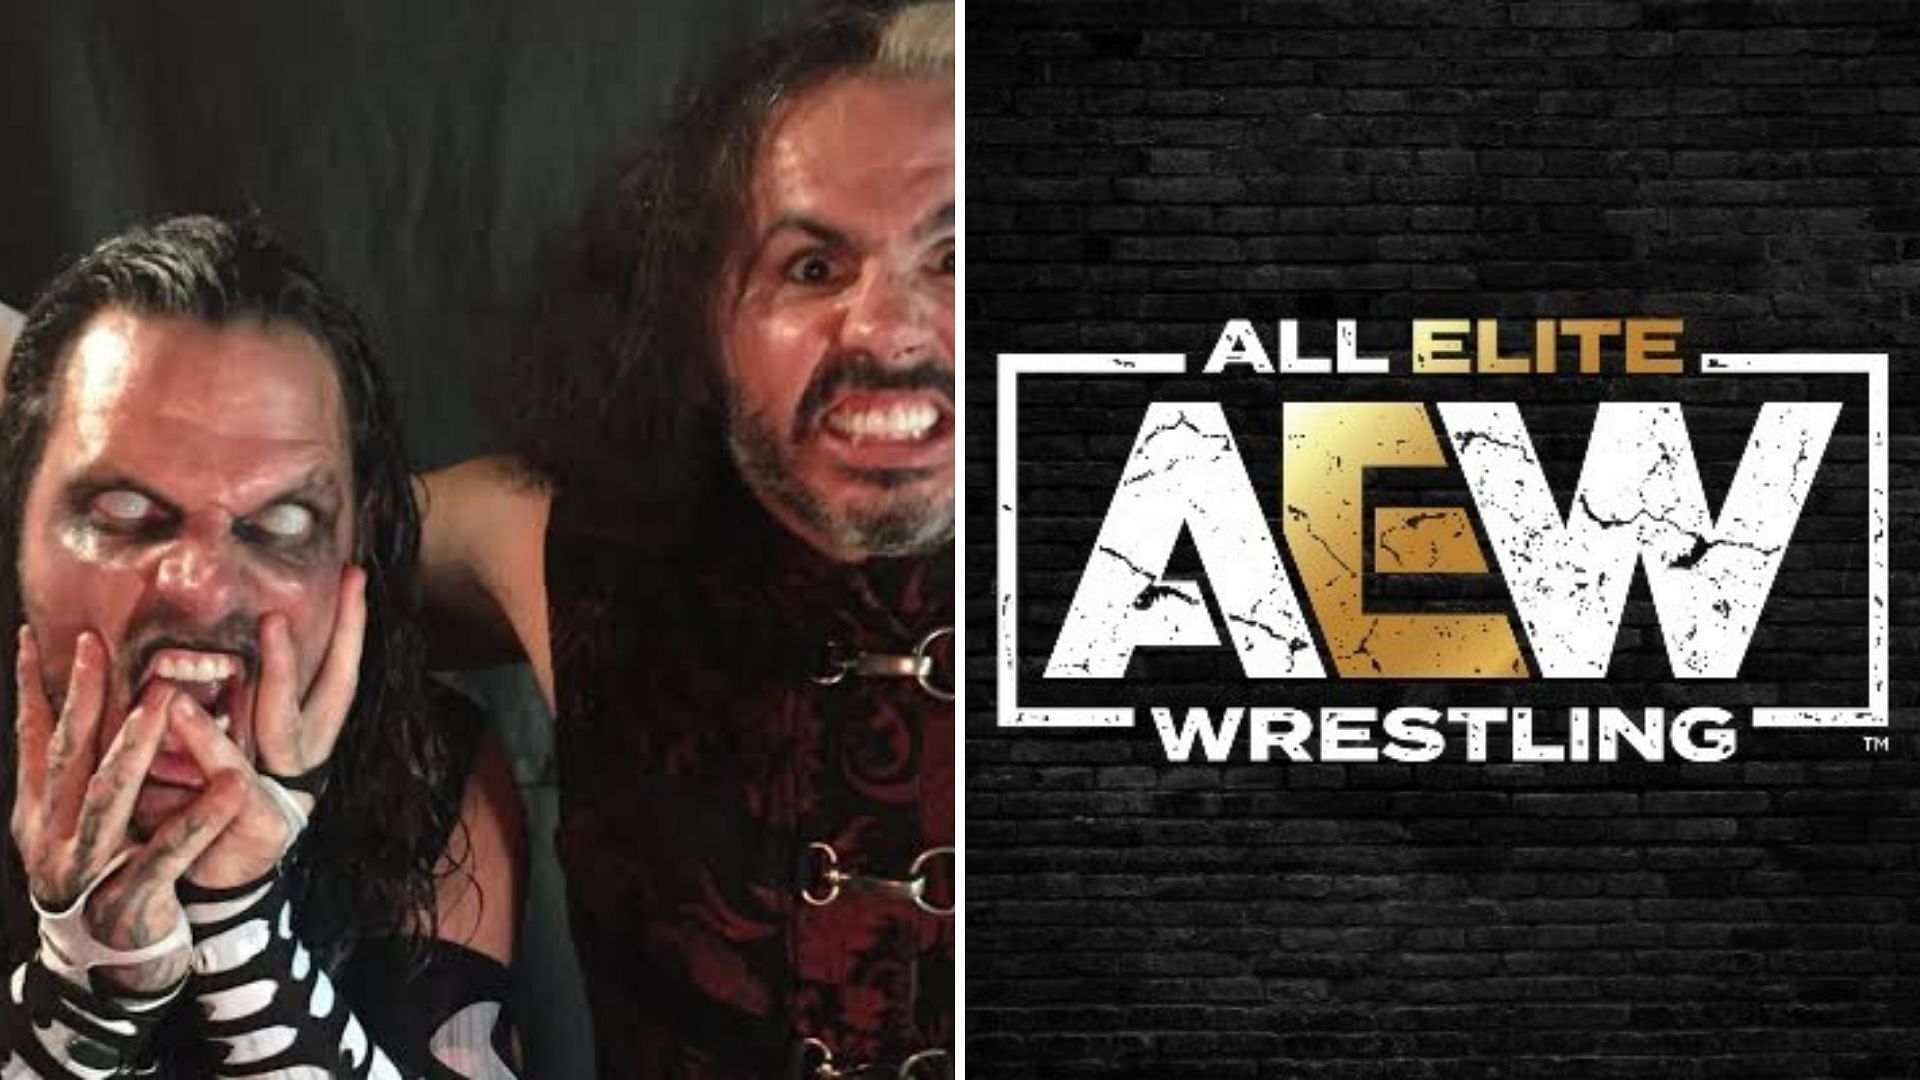 The Hardy Boyz could soon reunite in AEW.